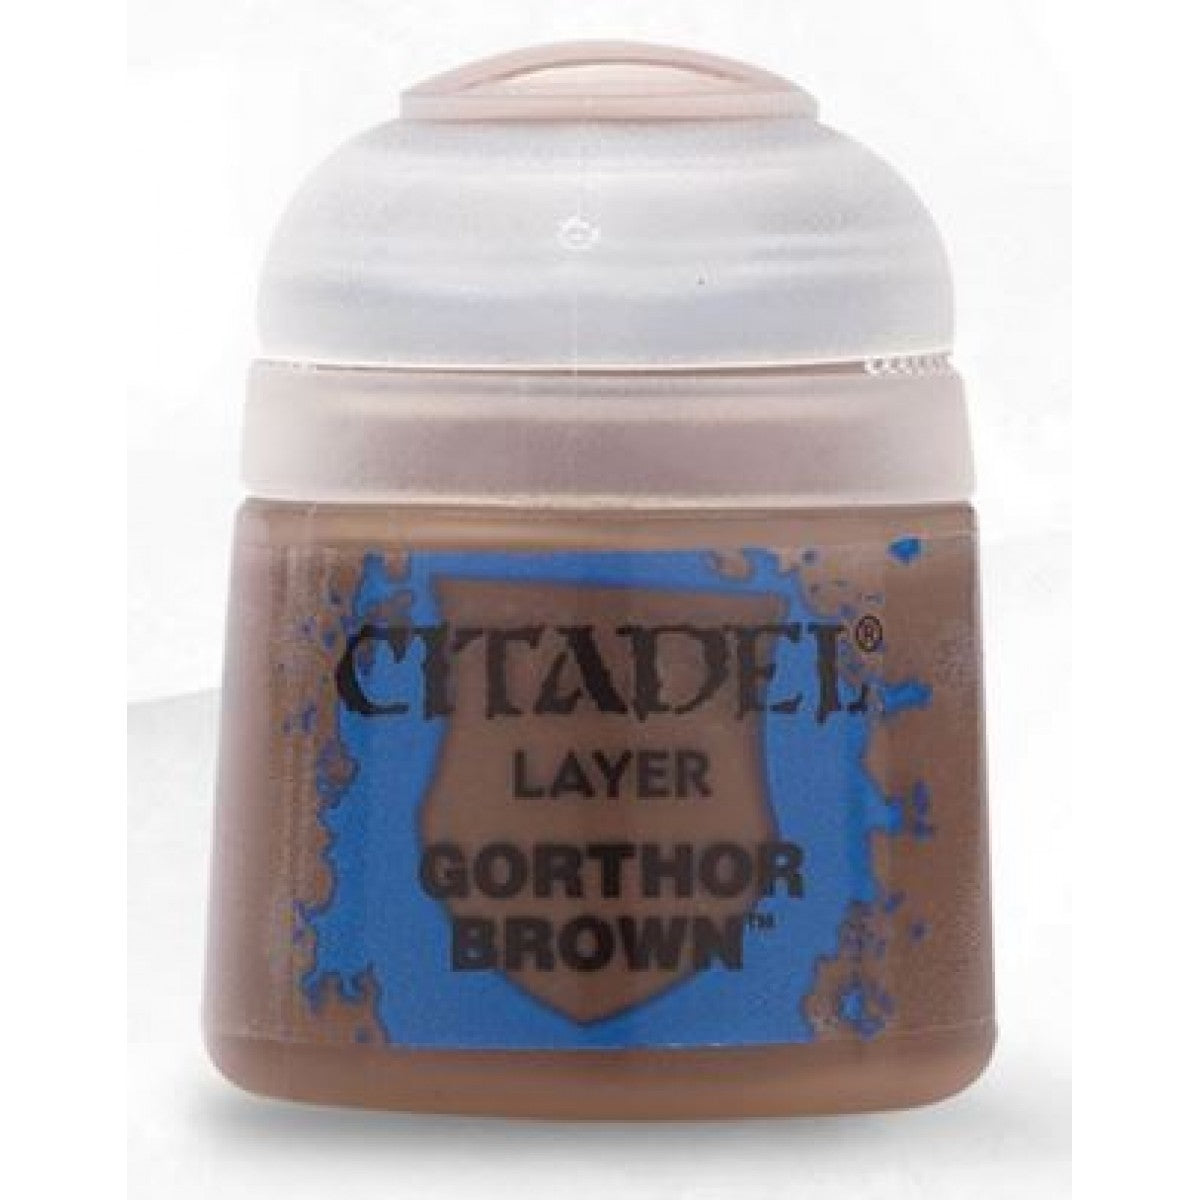 Citadel Layer Paint - Gorthor Brown 12ml (22-47)